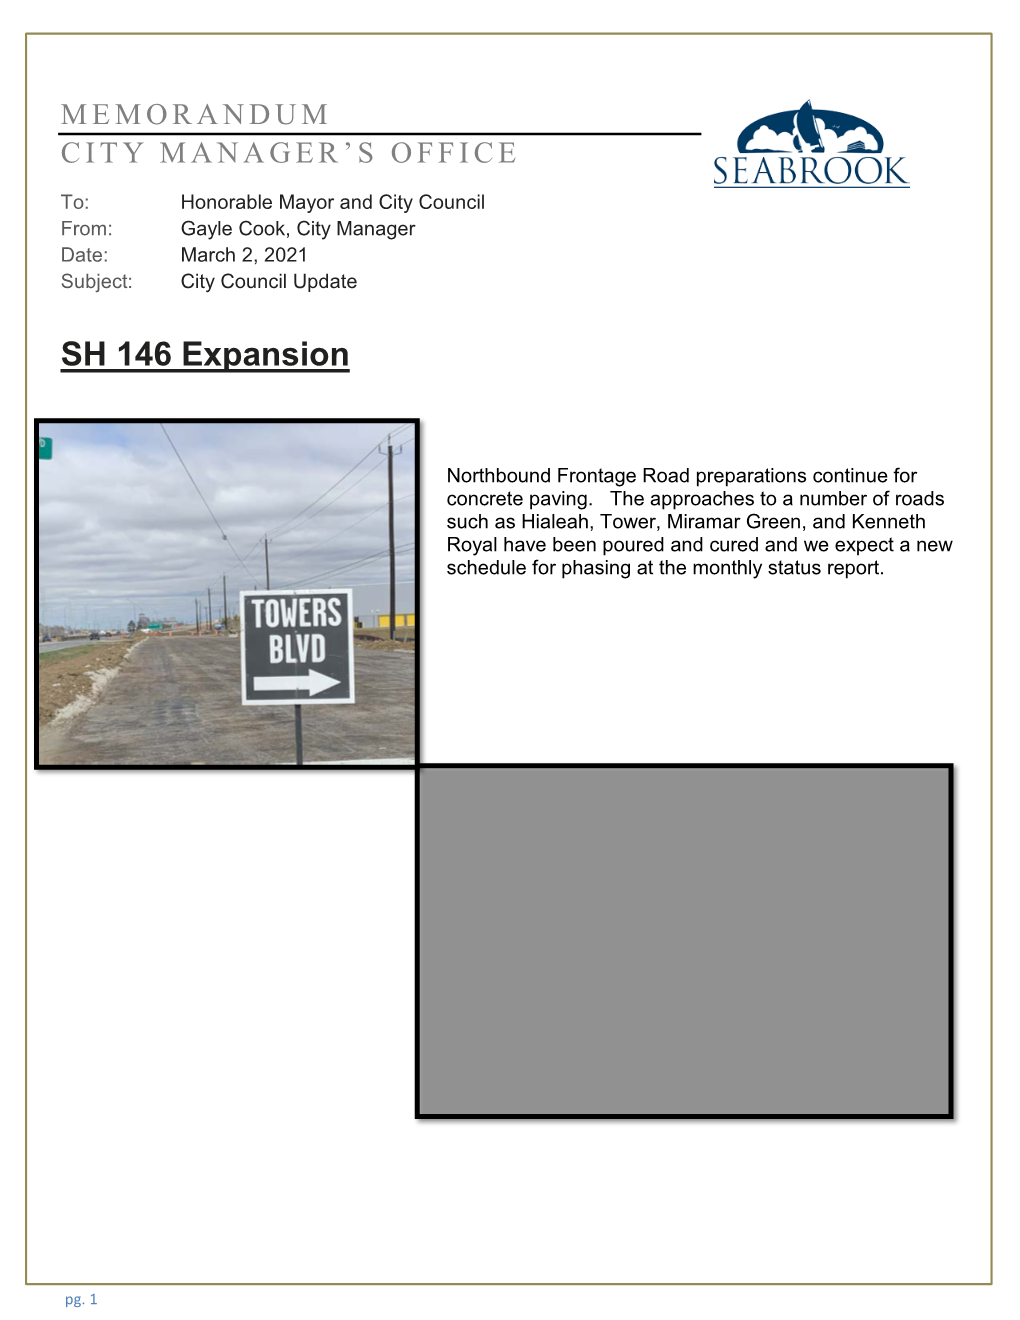 SH 146 Expansion